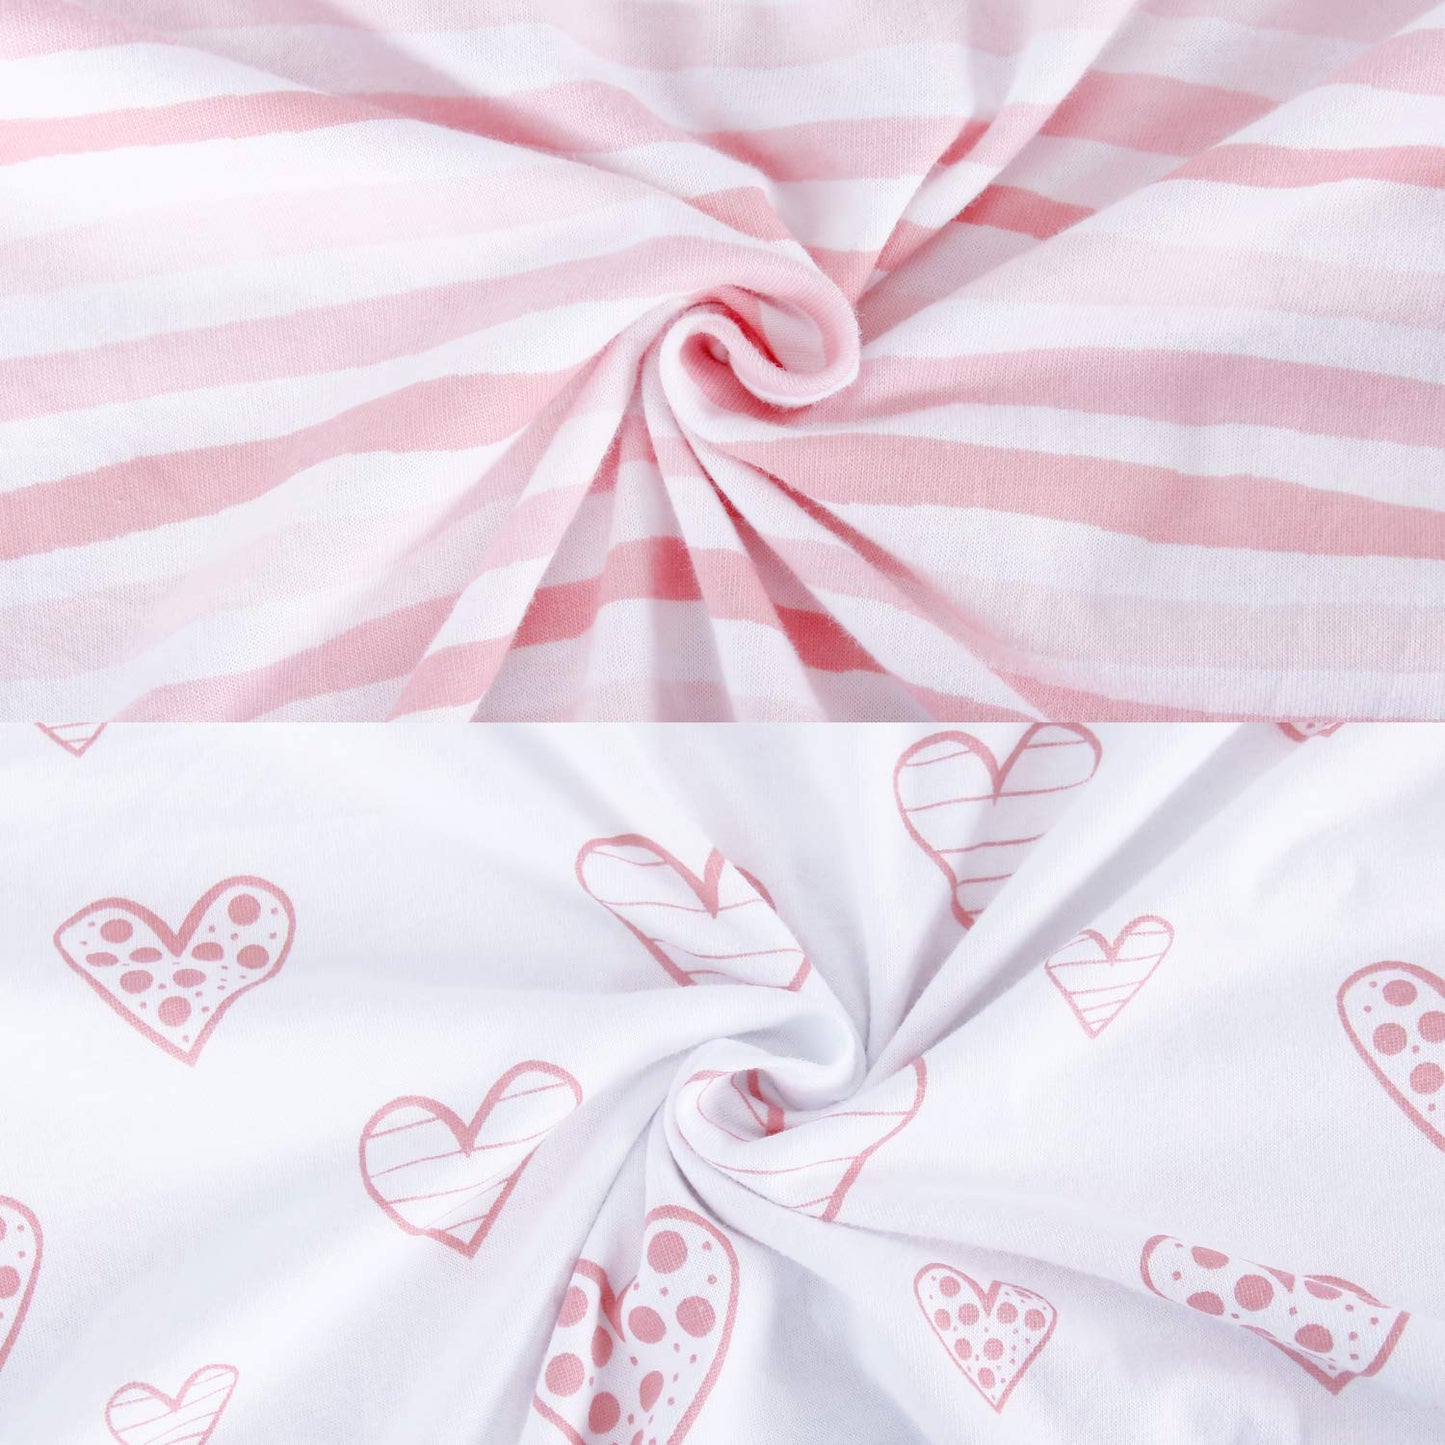 Crib Sheets - 2 Pack, 100% Jersey Cotton, Grey & White (for Standard Crib) - Biloban Online Store